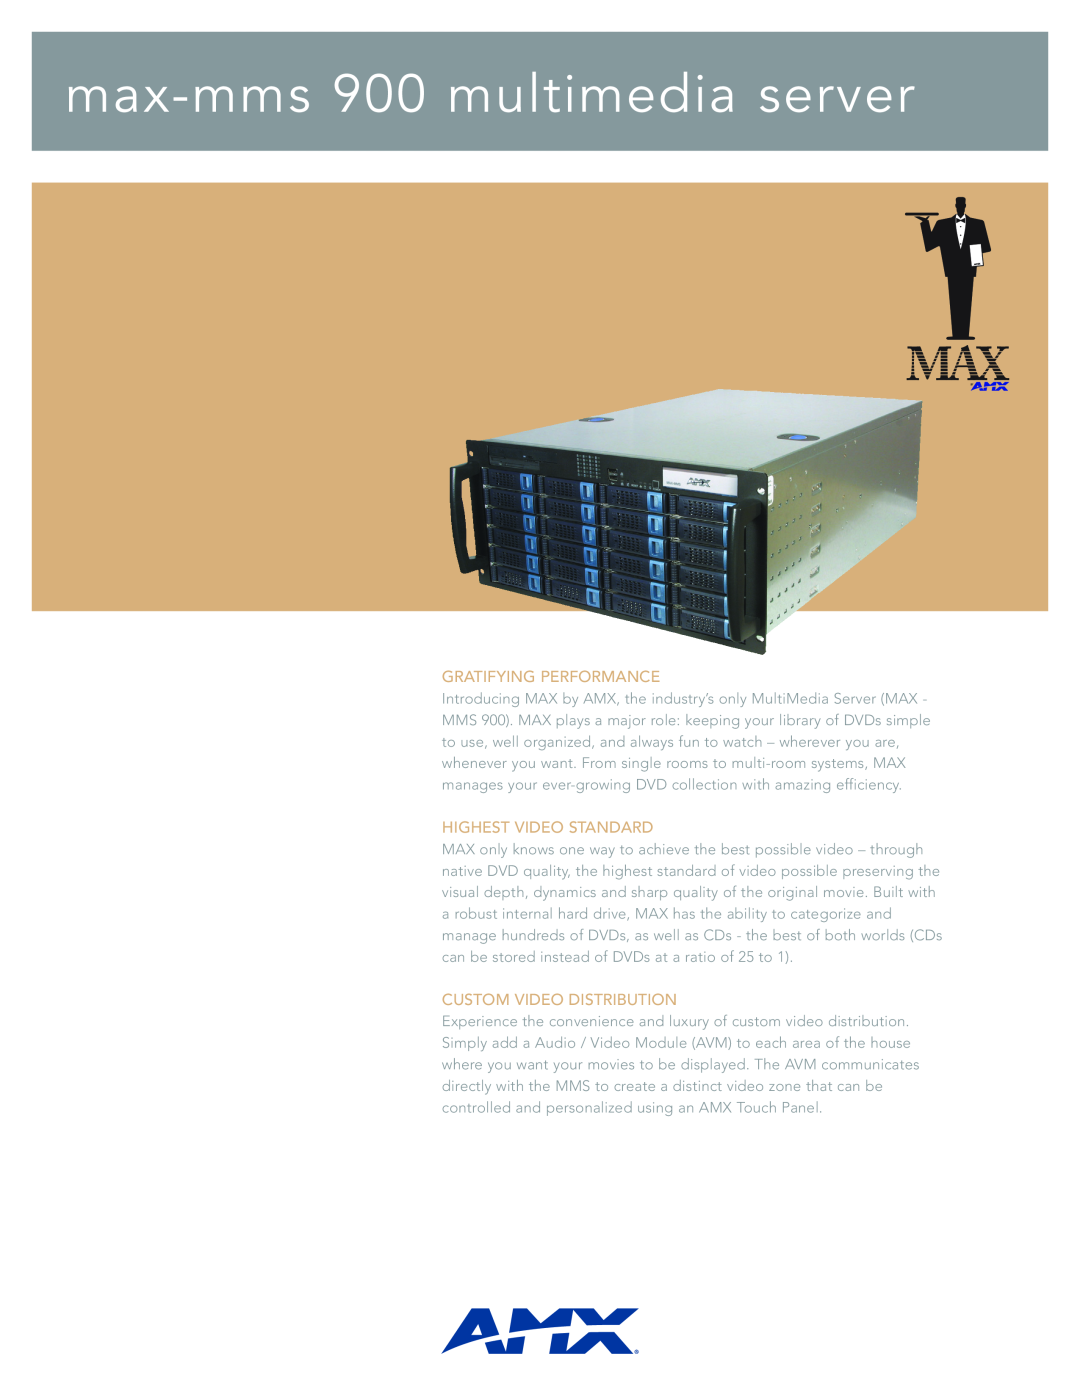 AMX max mss 900 manual max-mms 900 multimedia server, Gratifying Performance, Highest Video Standard 